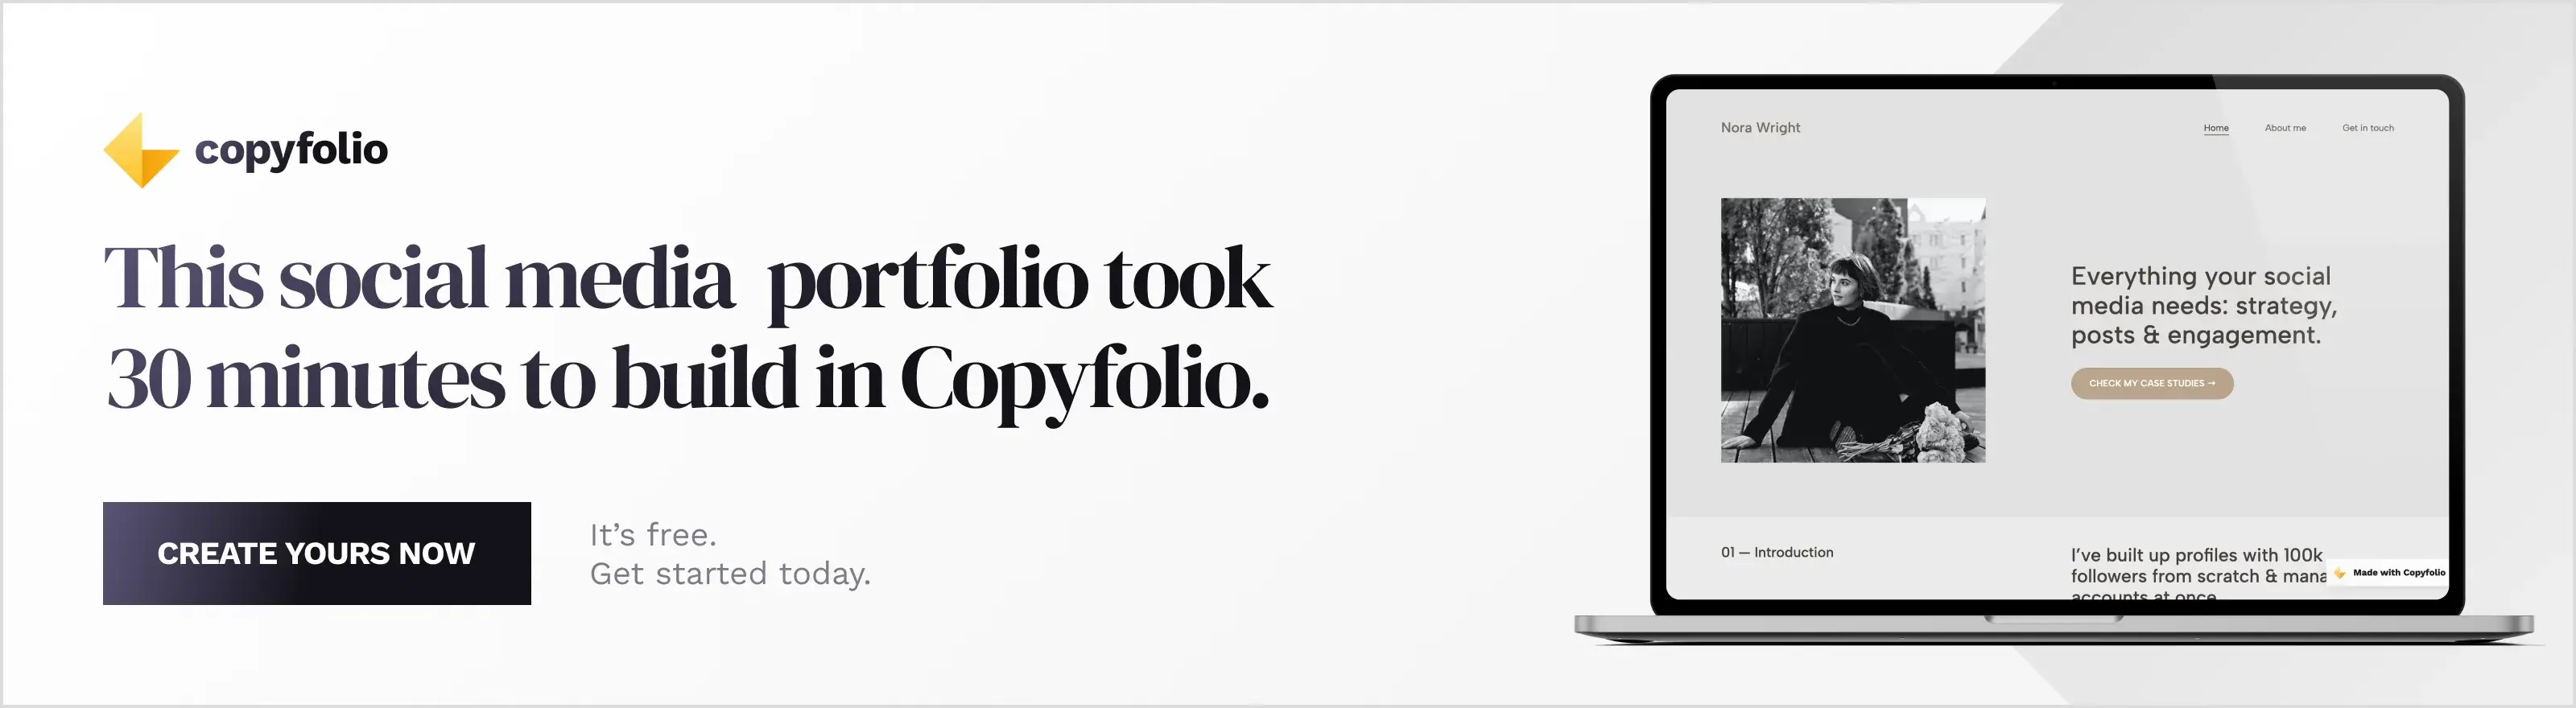 This social media portfolio took 30 minutes to build in Copyfolio. Create yours now.